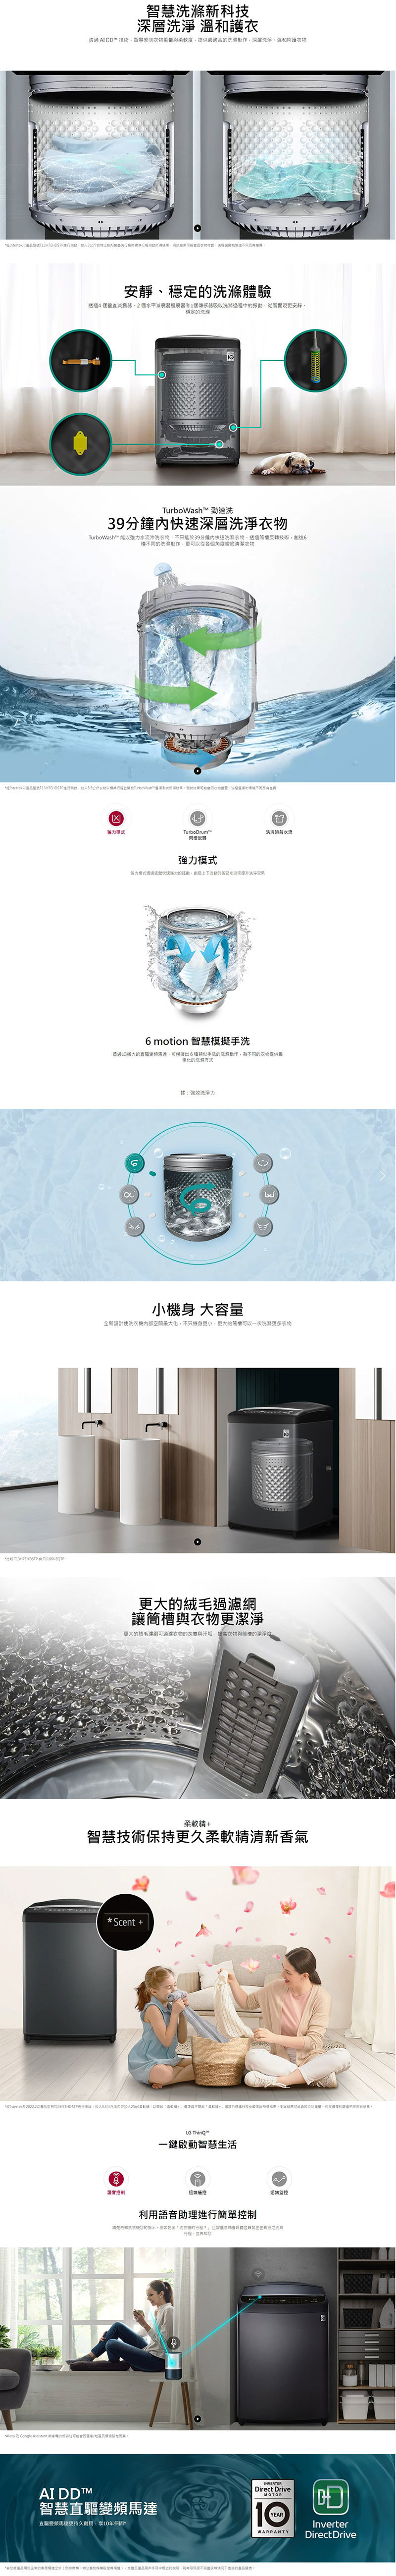 WT-VDN15M 洗衣機 15kg AIDD 直驅變頻 直立式 AI 智慧感測 提供最適洗程